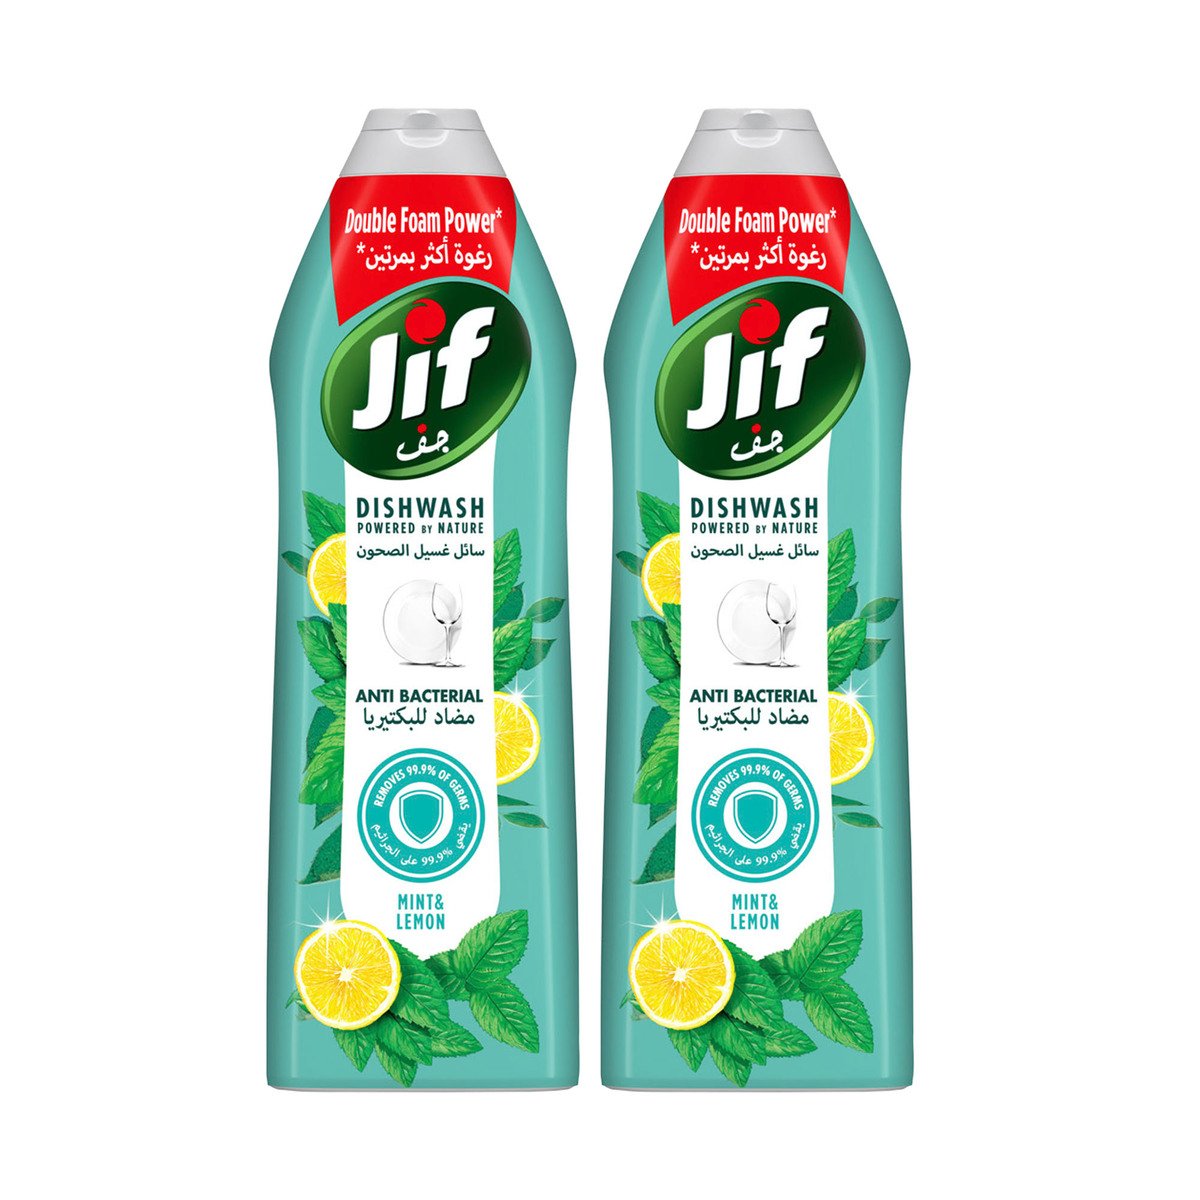 اشتري قم بشراء Jif Antibacterial Dishwashing Liquid Mint & Lemon Double Foam Power Value Pack 2 x 670 ml Online at Best Price من الموقع - من لولو هايبر ماركت Washing Up في الامارات